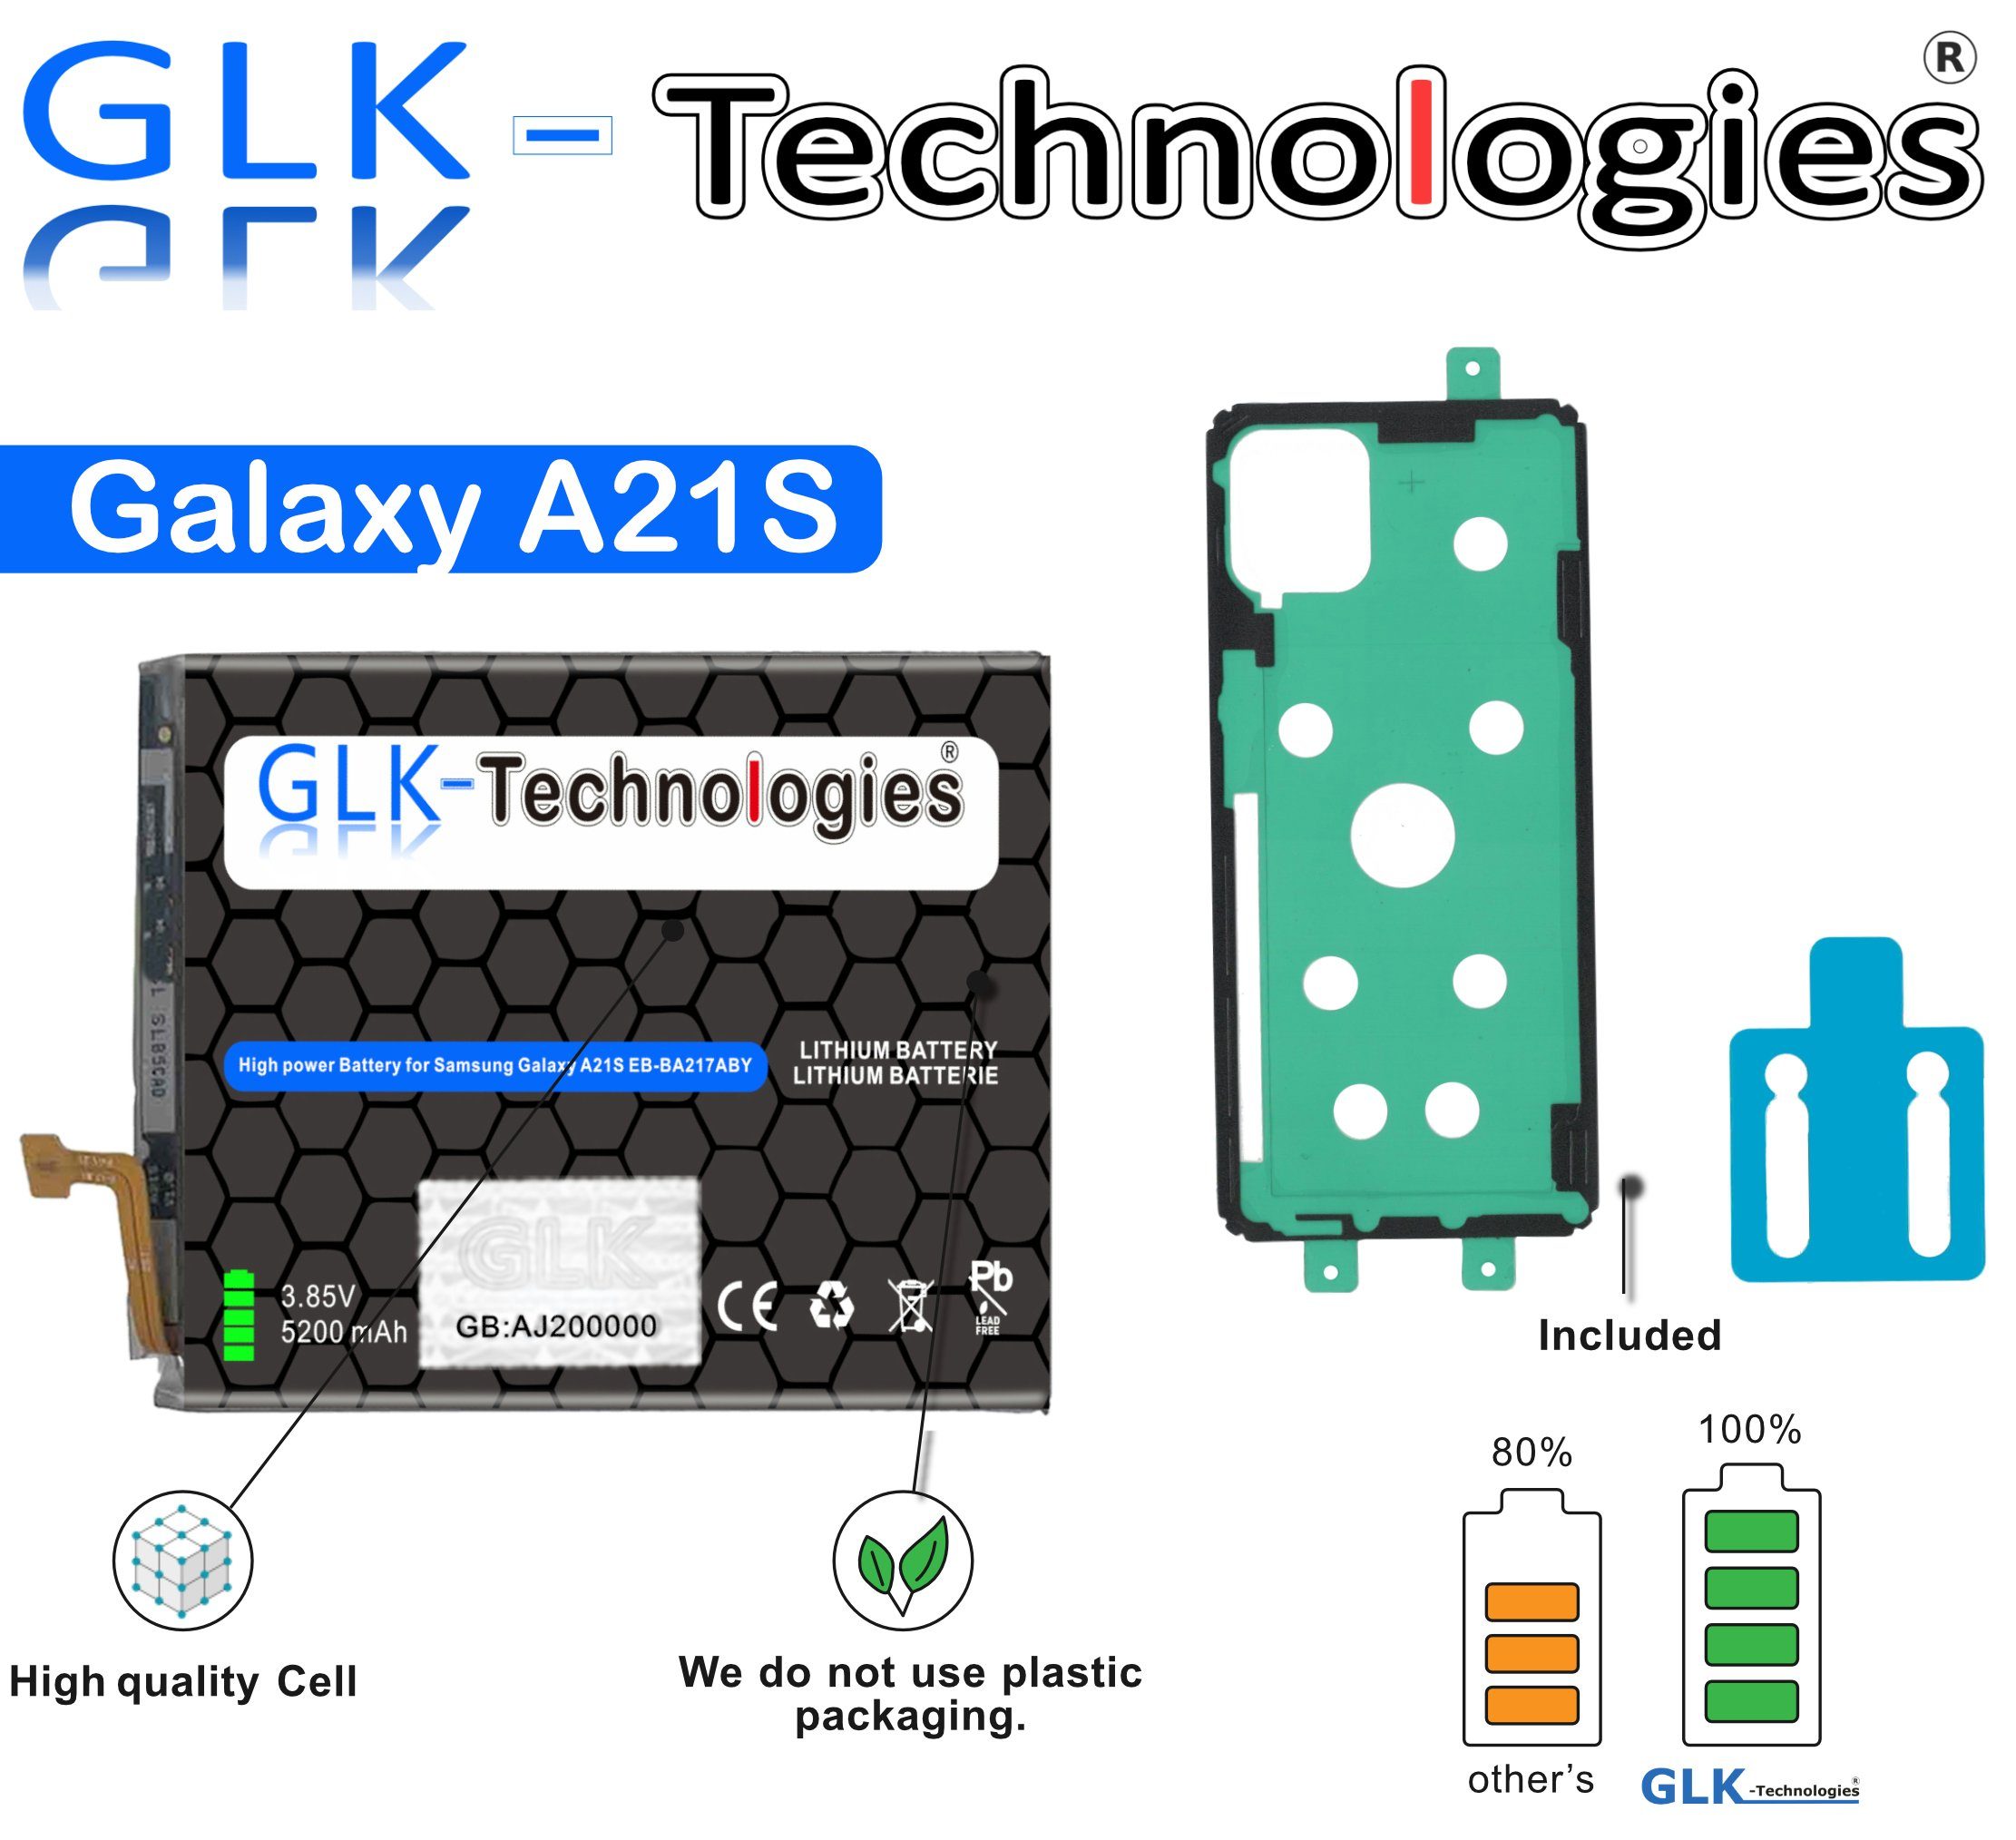 (A217F) Akku Galaxy EB-BA217ABY GLK-Technologies Samsung Handy-Akku für A21s Glk Set Ohne